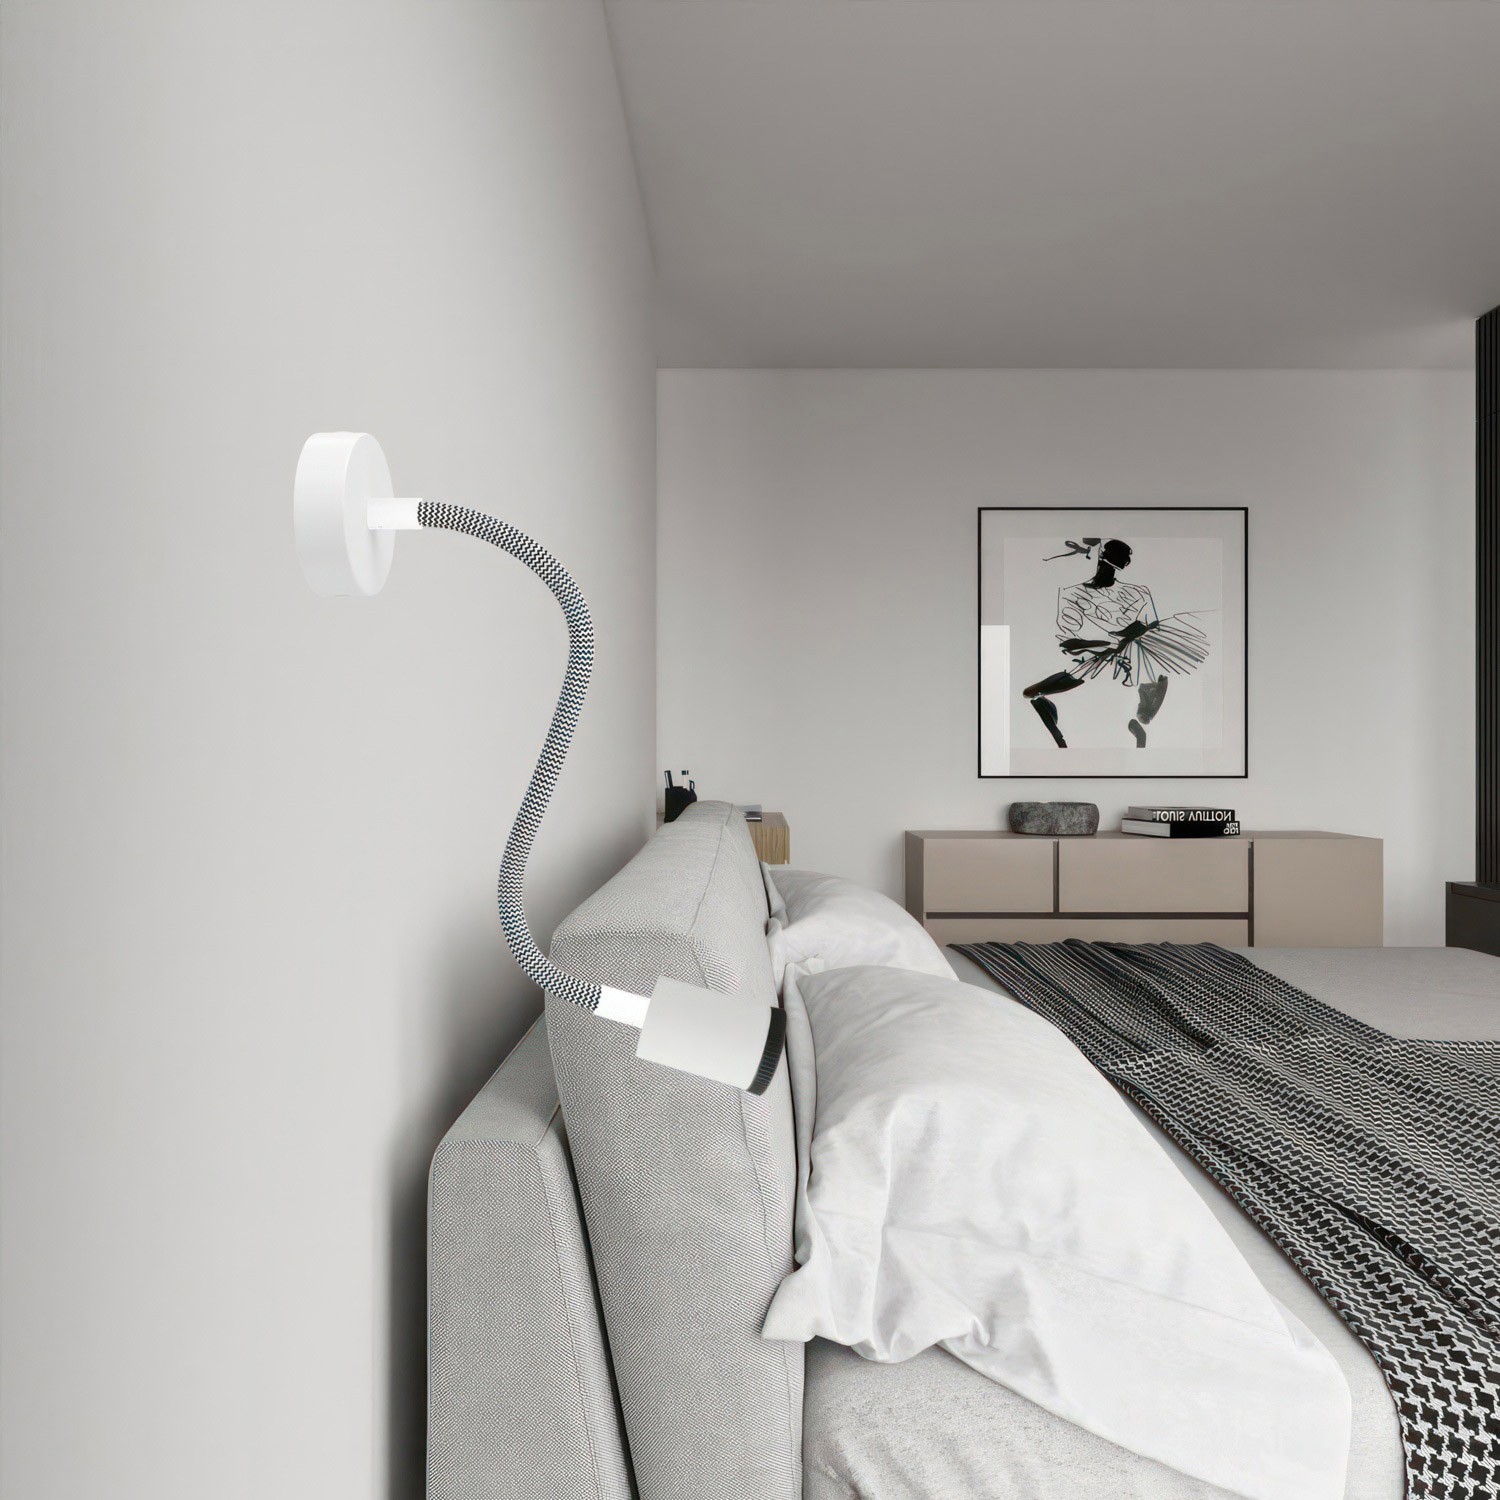 Creative-cables italia lámpara de techo/pared - blanco mate  apmflguvbo30vborz04